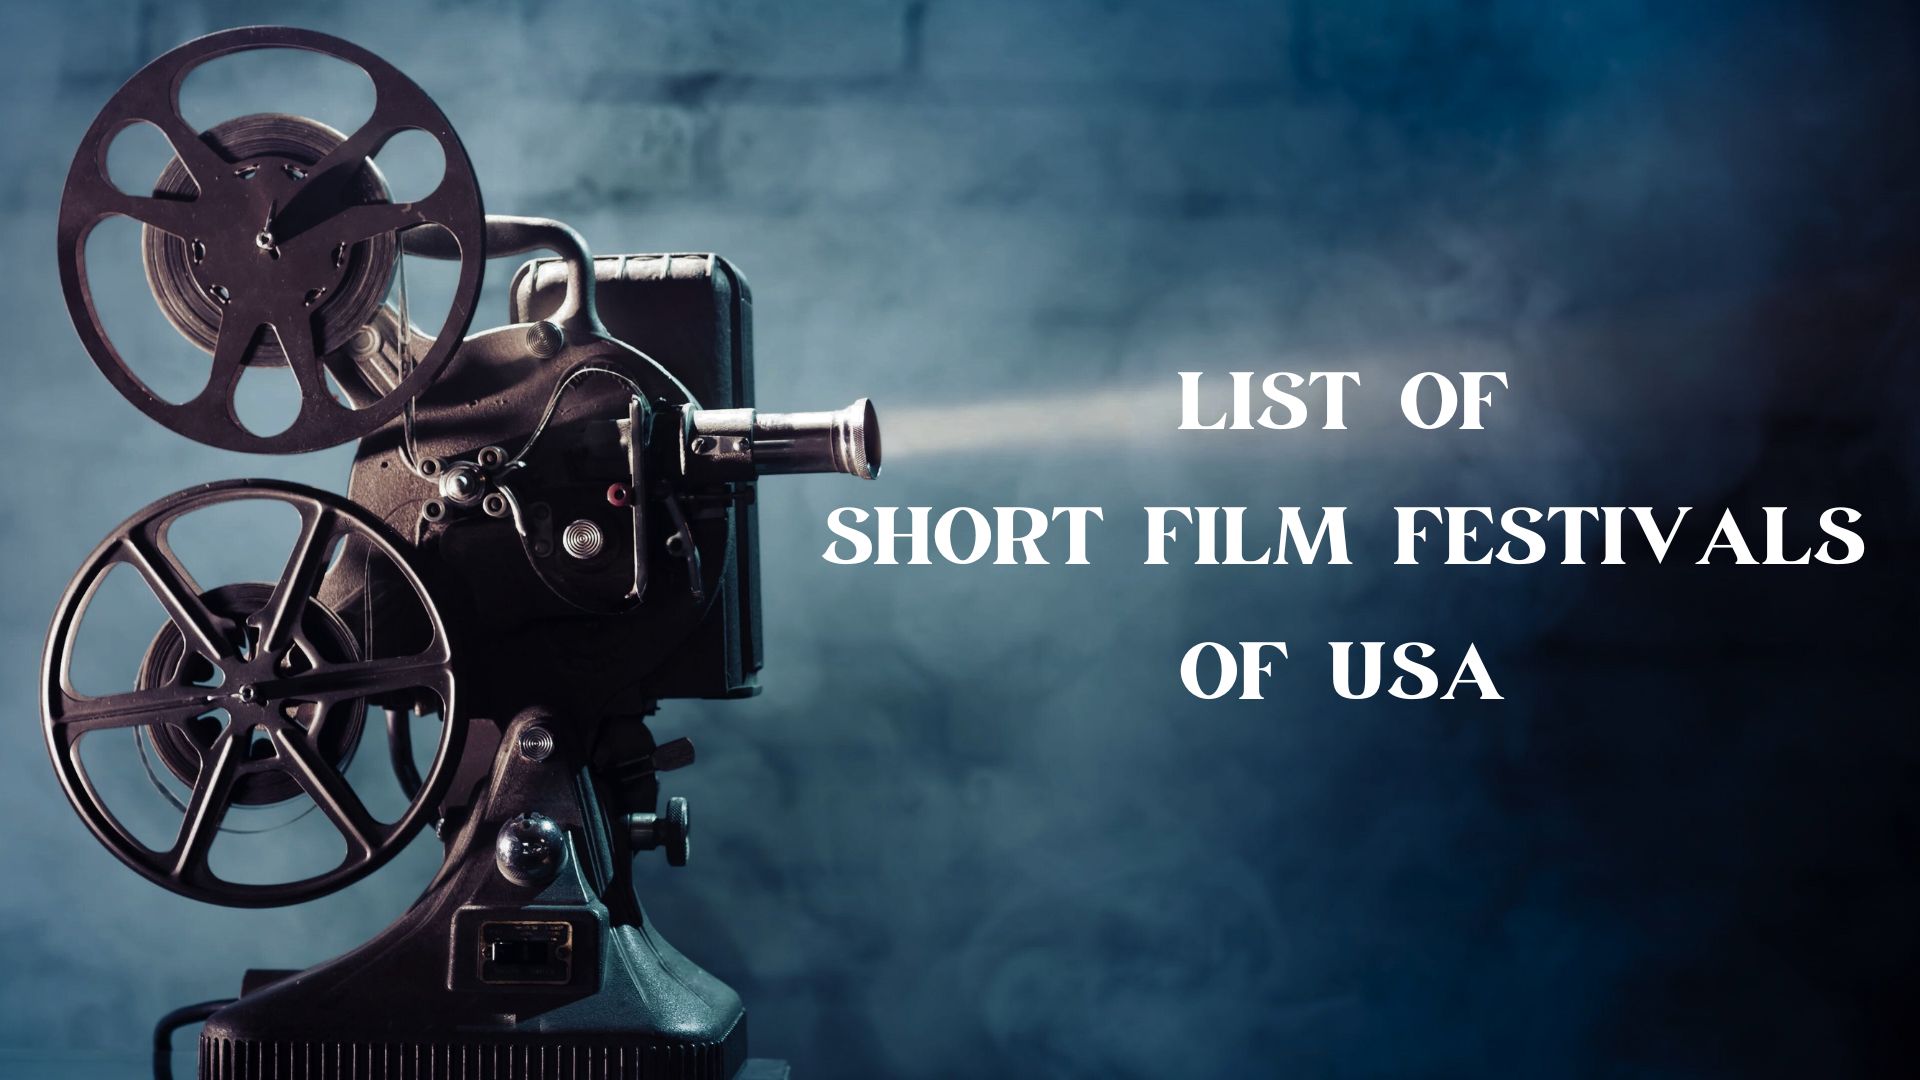 List of Short Film Festivals of USA